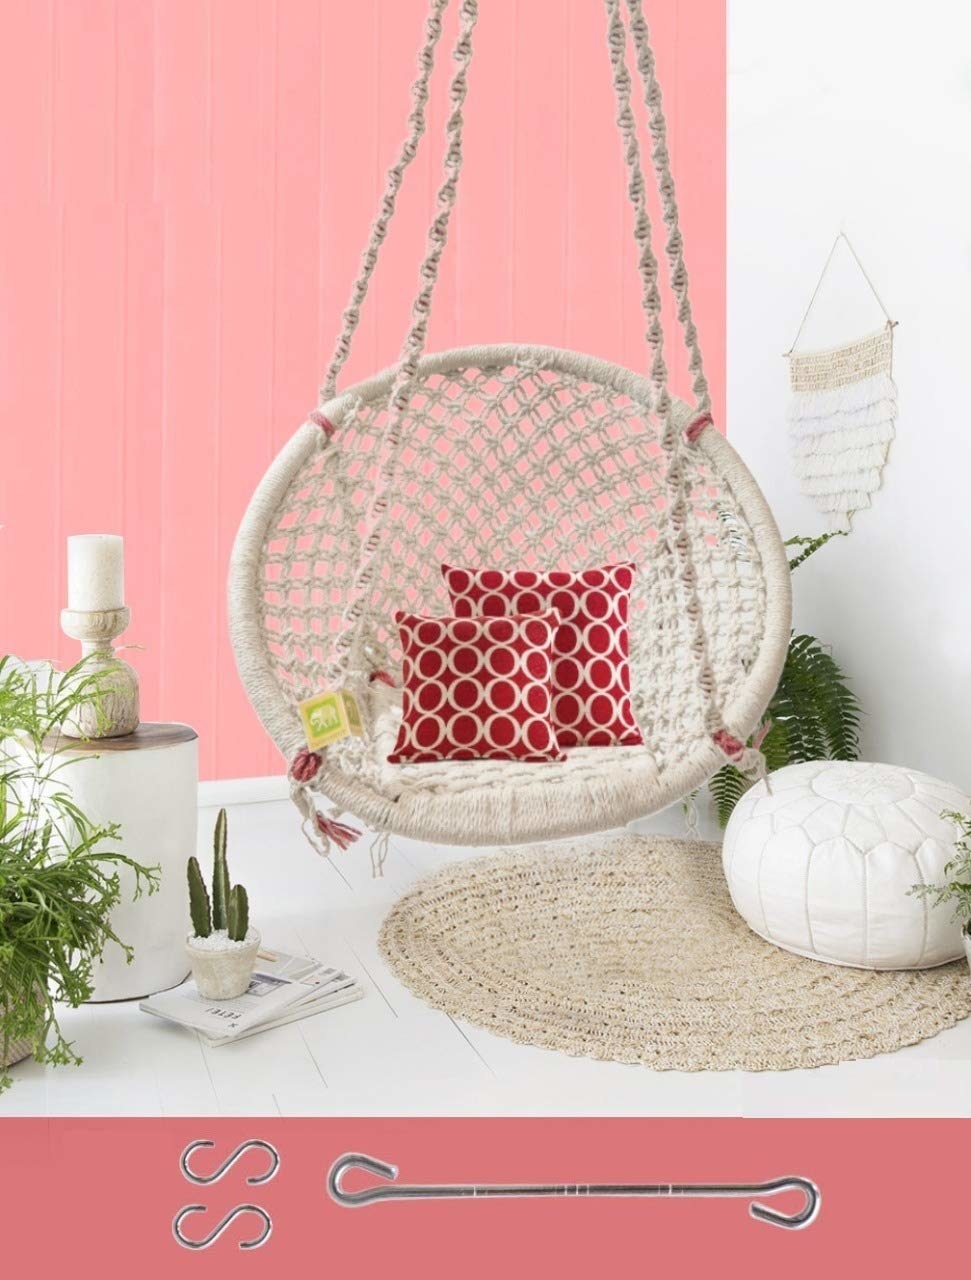 A circular hammock swing with cushions on it